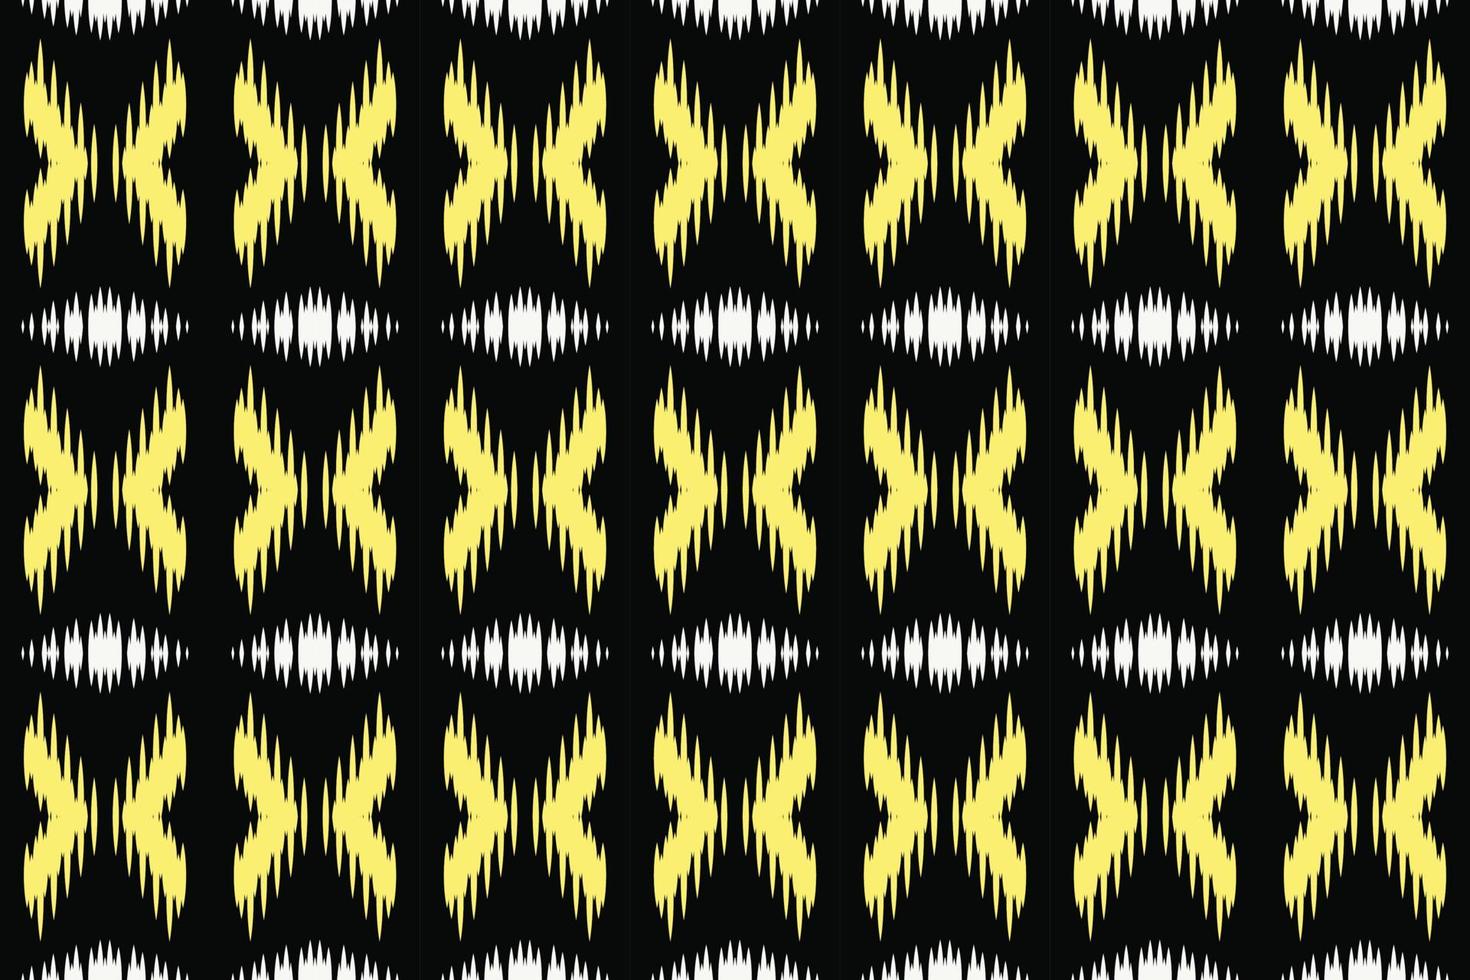 ikkat o ikat design tribale sfondo Borneo scandinavo batik boemo struttura digitale vettore design per Stampa saree Kurti tessuto spazzola simboli campioni